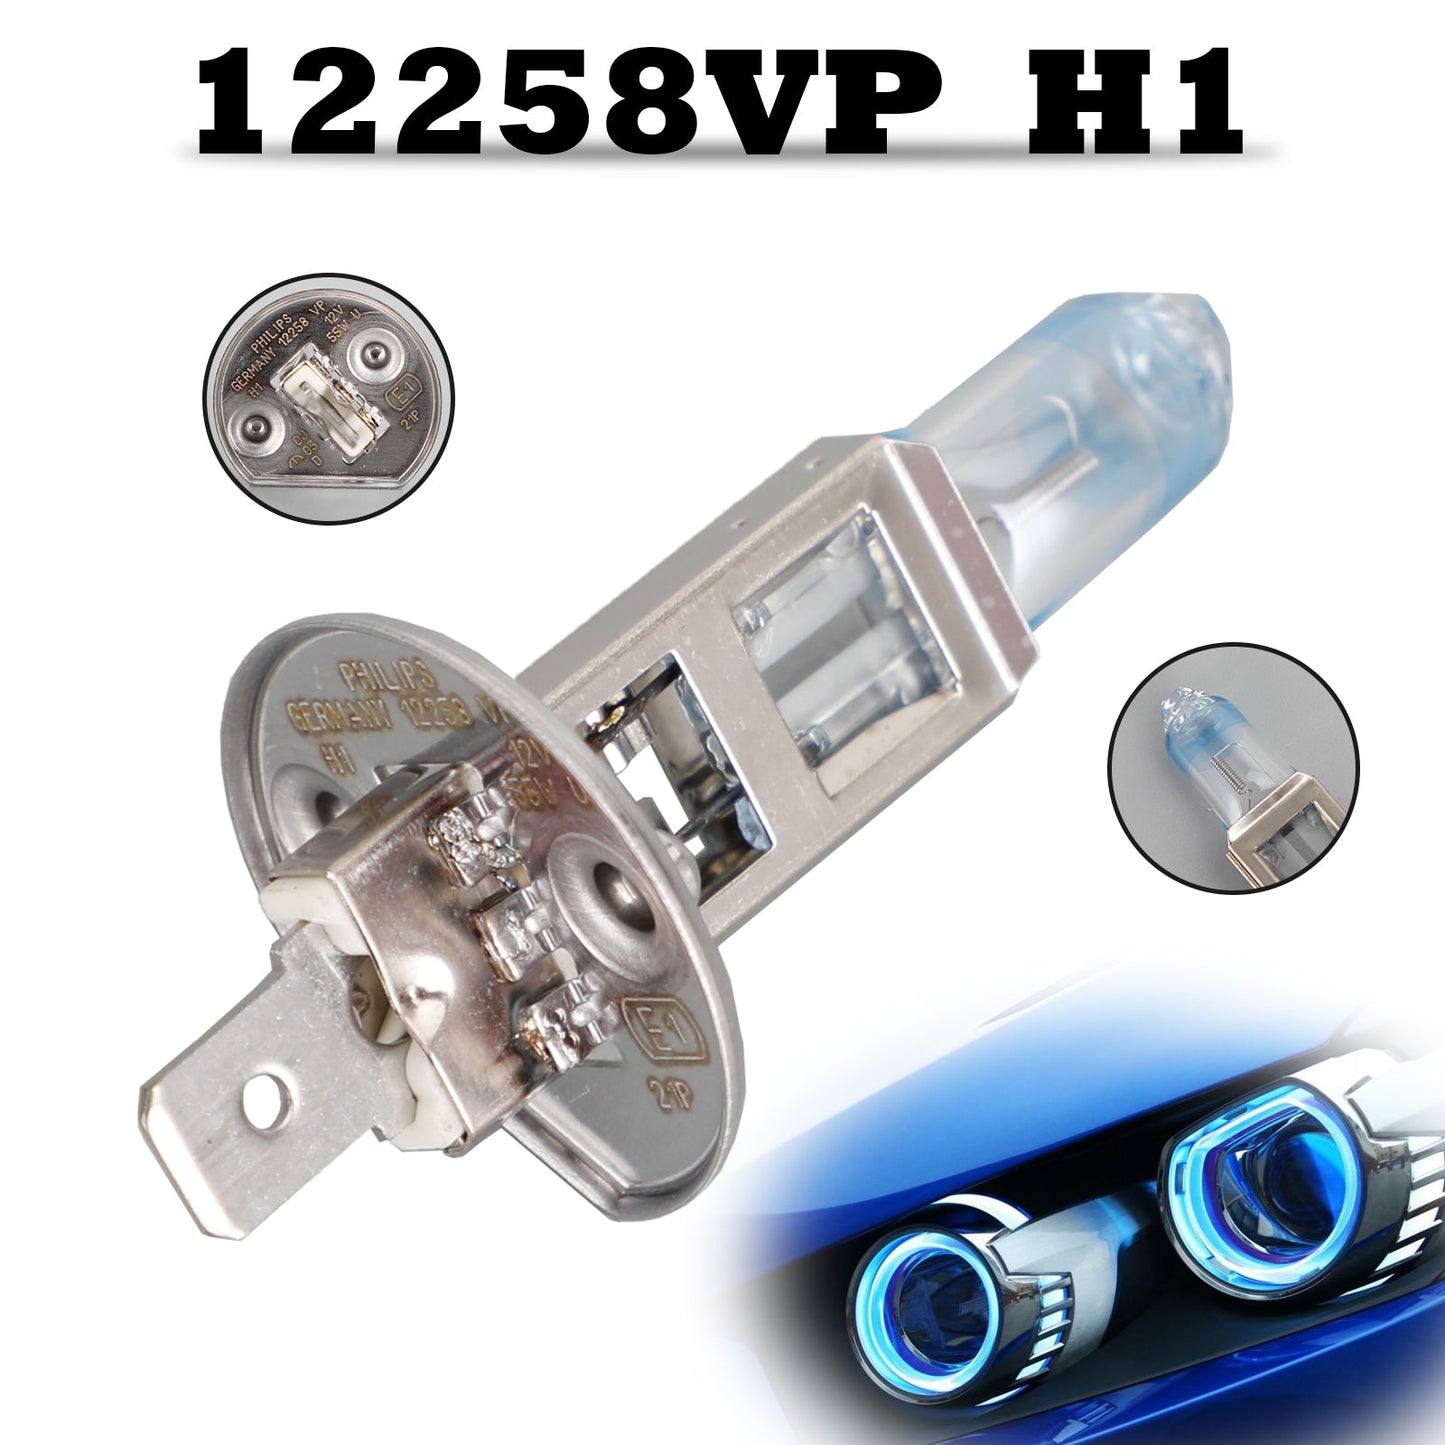 For Philips Visionplus 12258VP Headlight H1 12V 55W +50% Brighter +10M